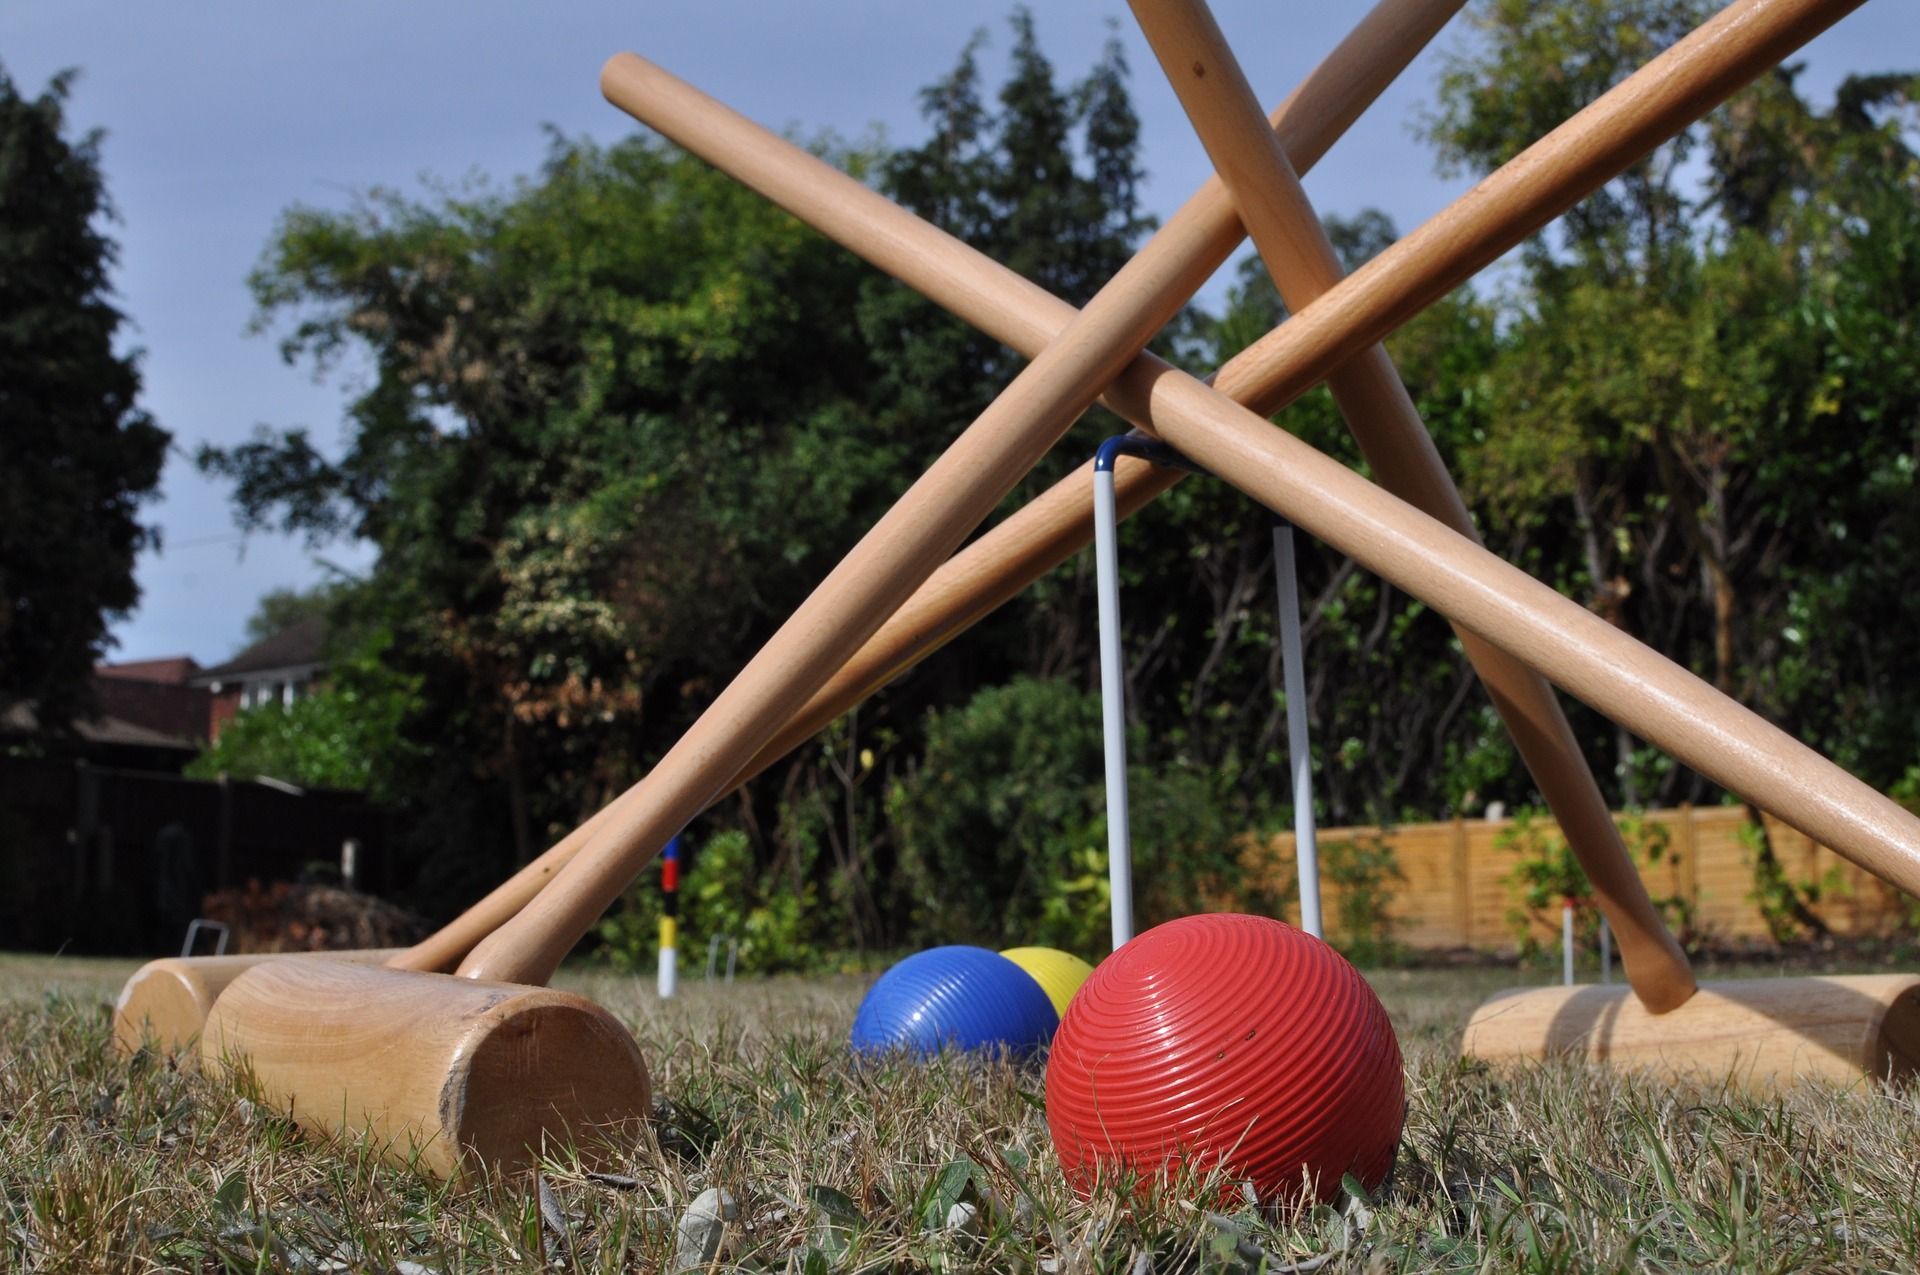 Croquet mallets standing above the balls